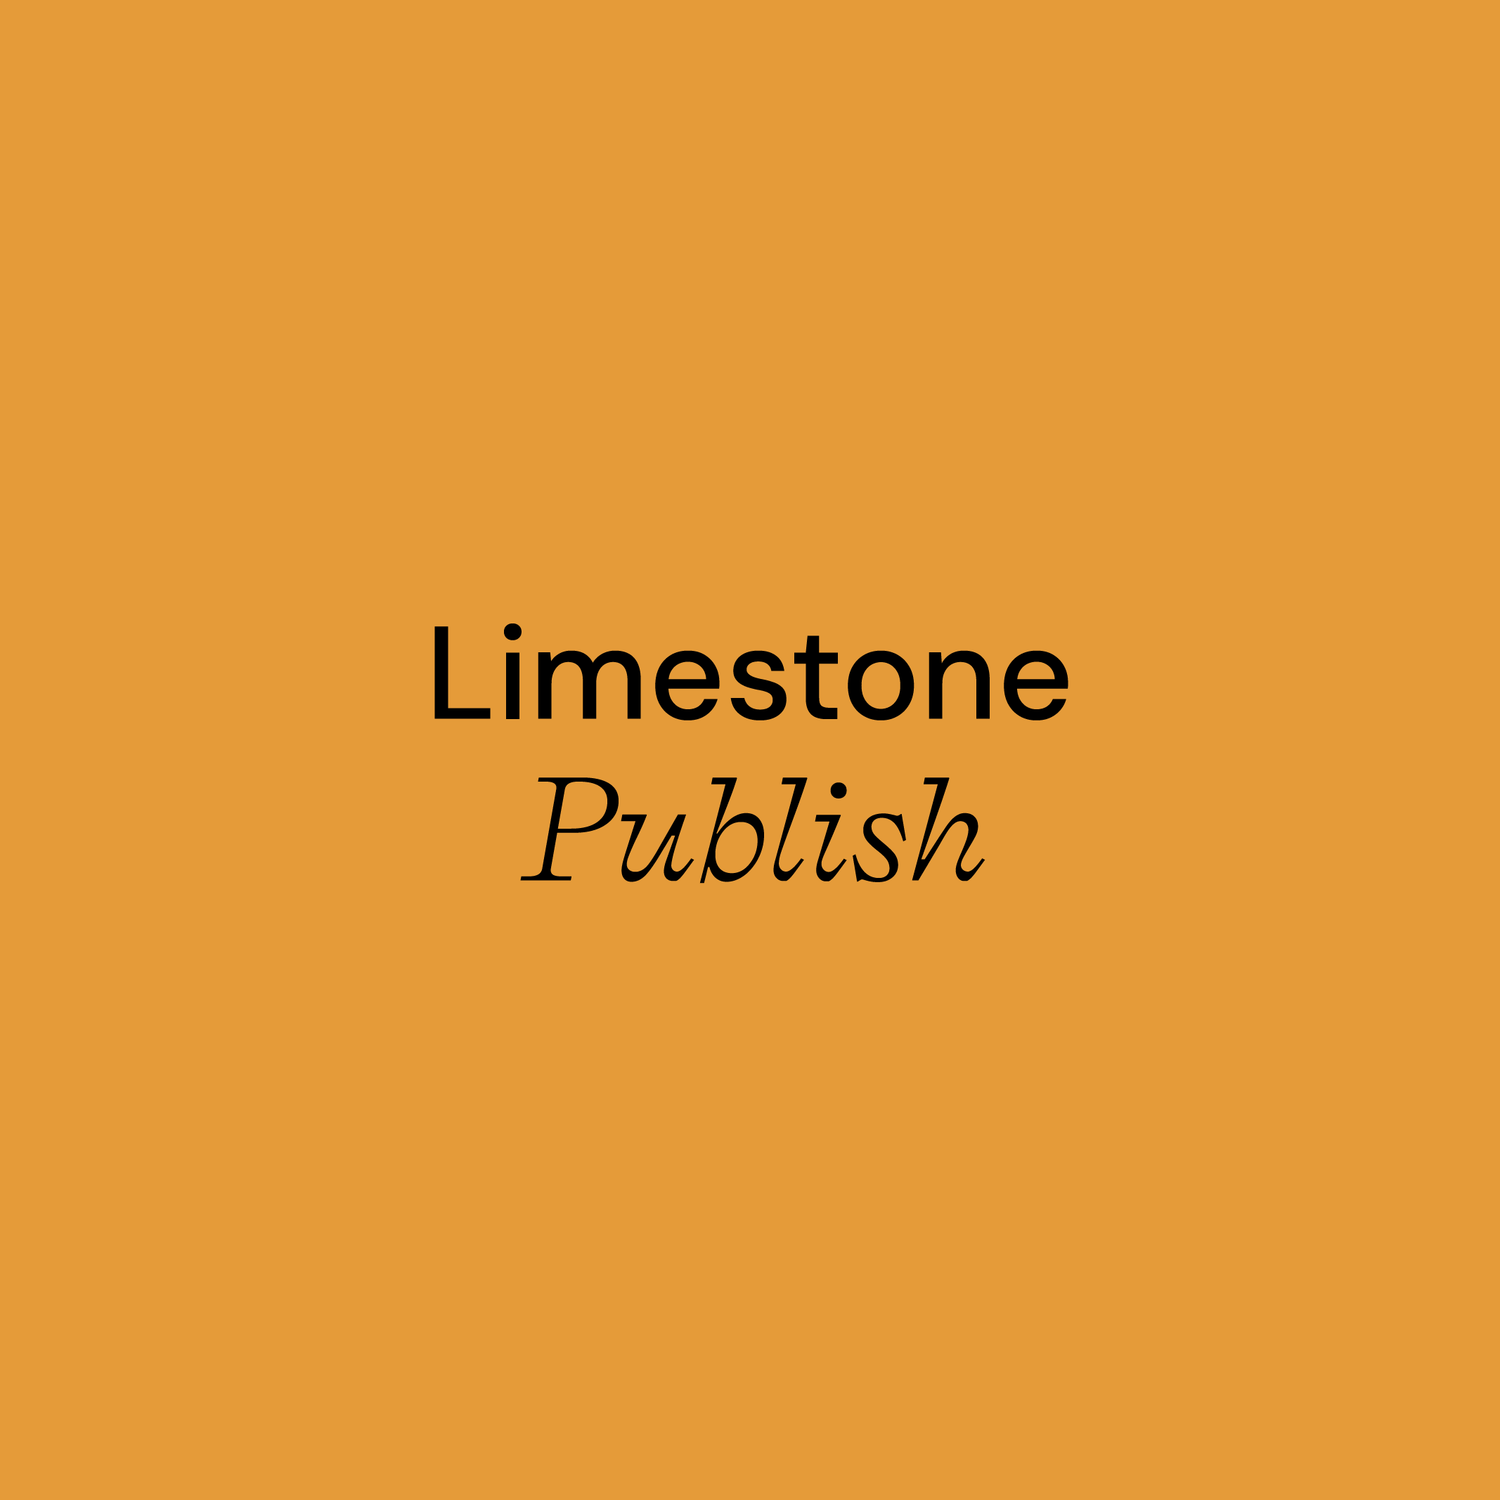 Limestone Publish